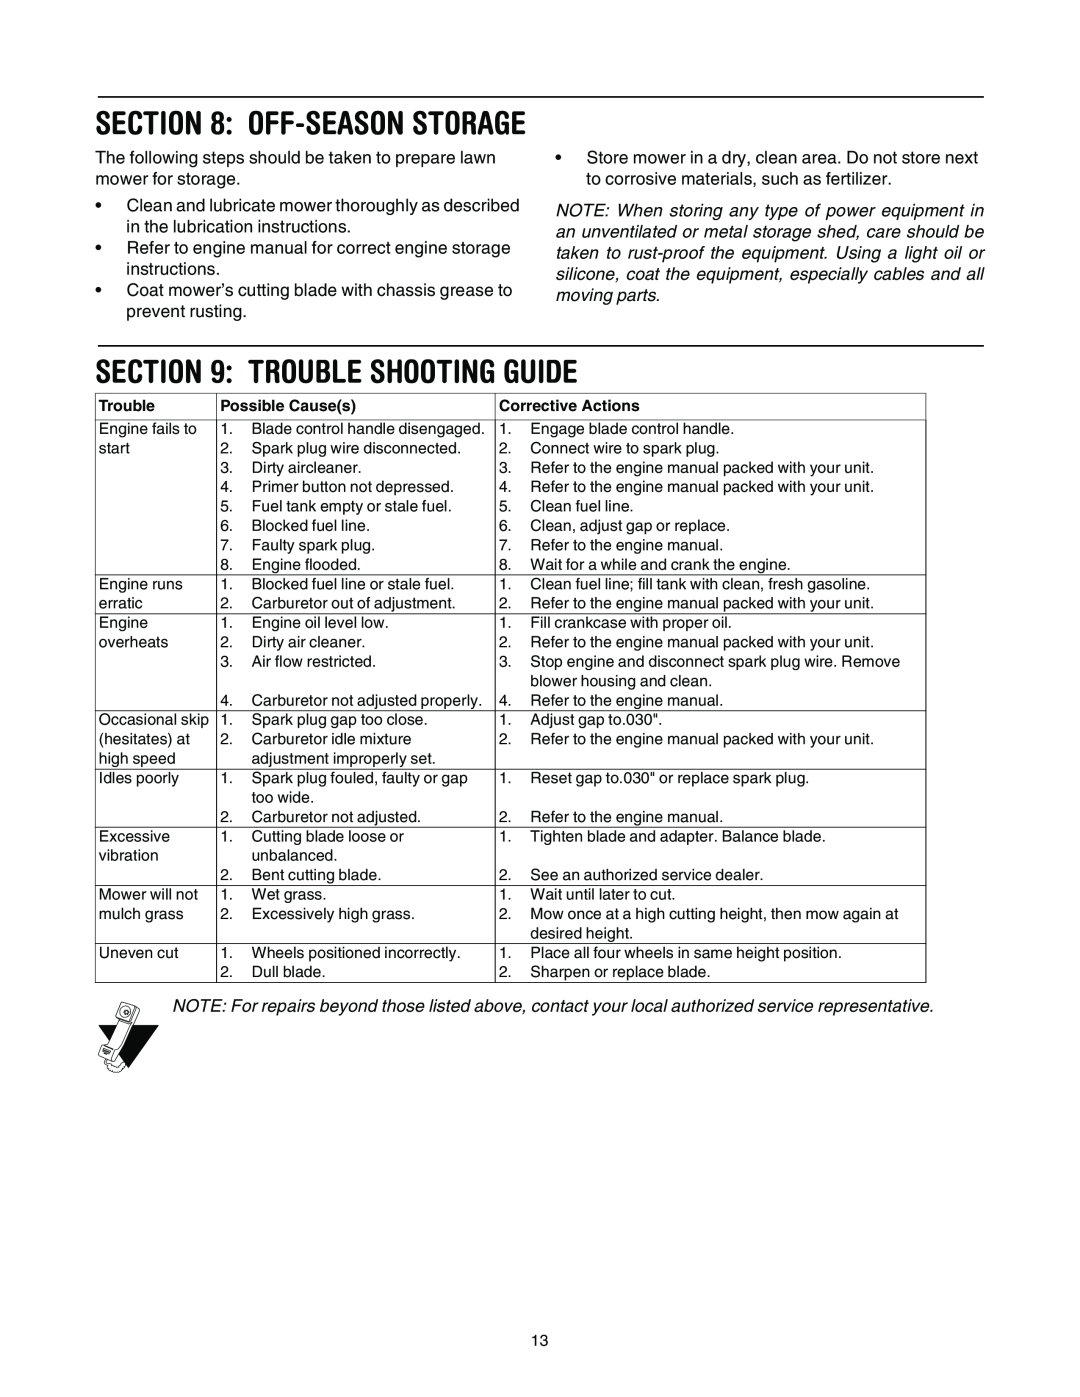 MTD 022, 021 manual Trouble Shooting Guide, Off-Season Storage 